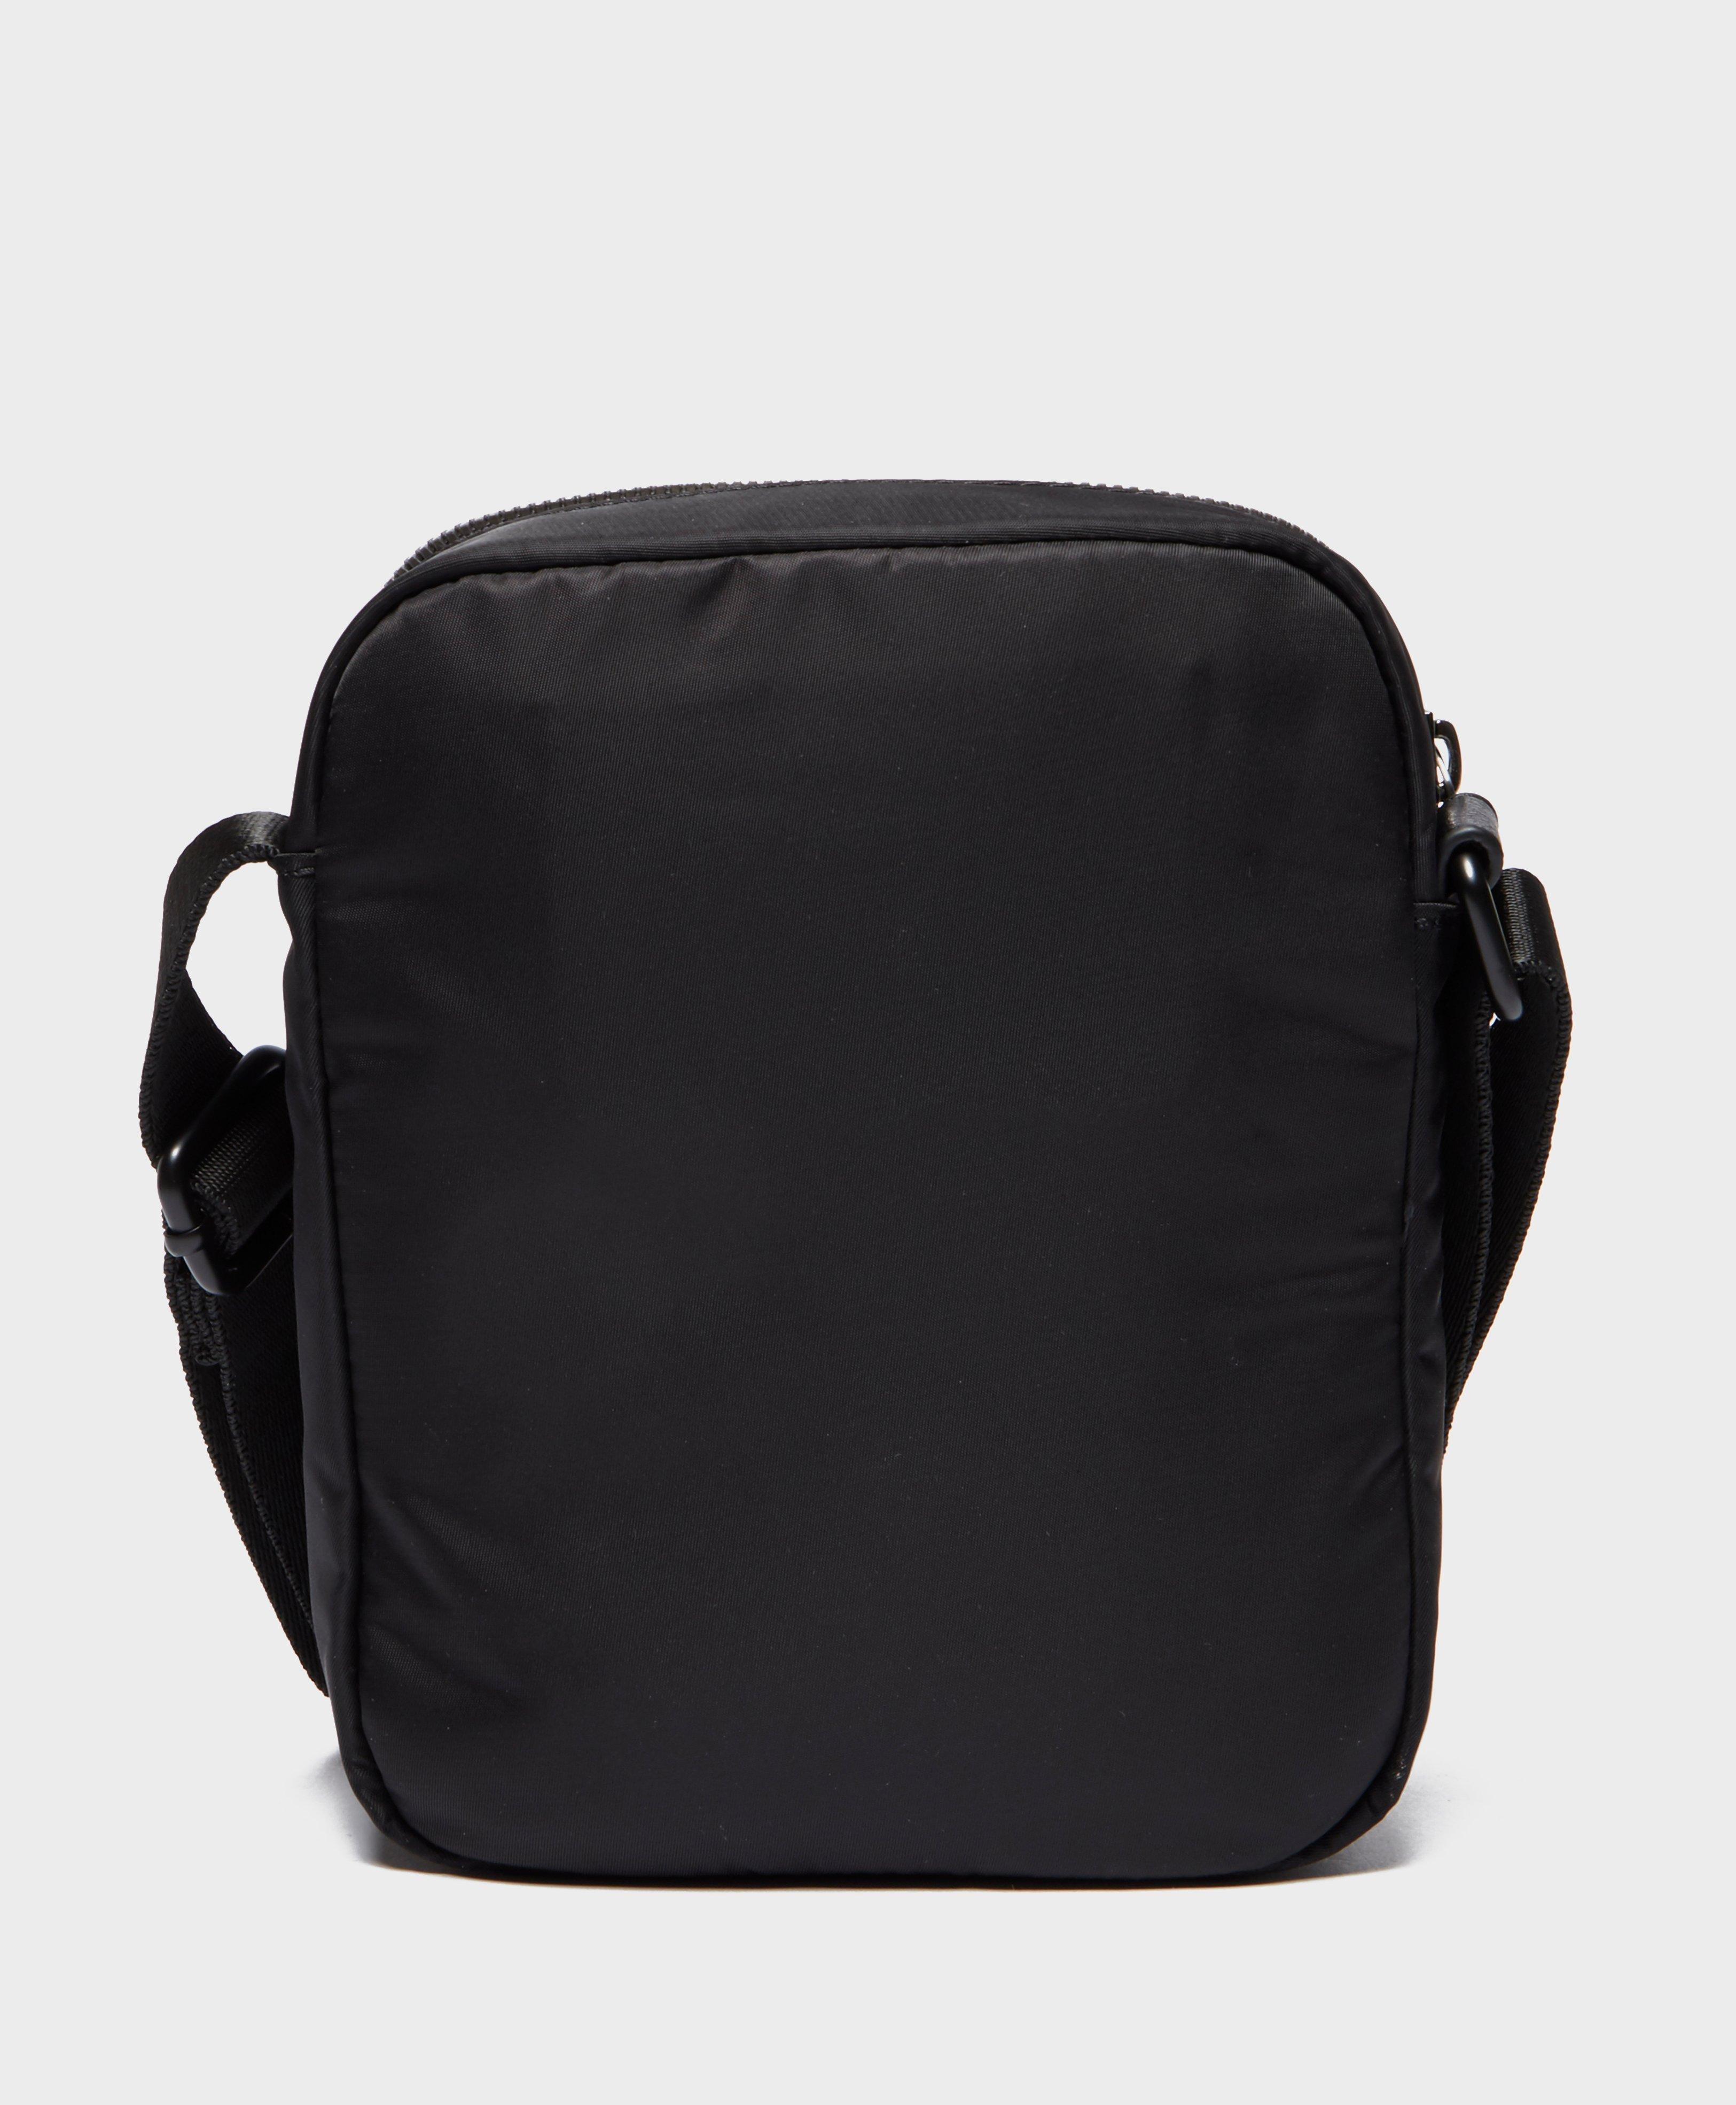 Calvin Klein Synthetic Mini Crossbody Bag in Black for Men - Lyst